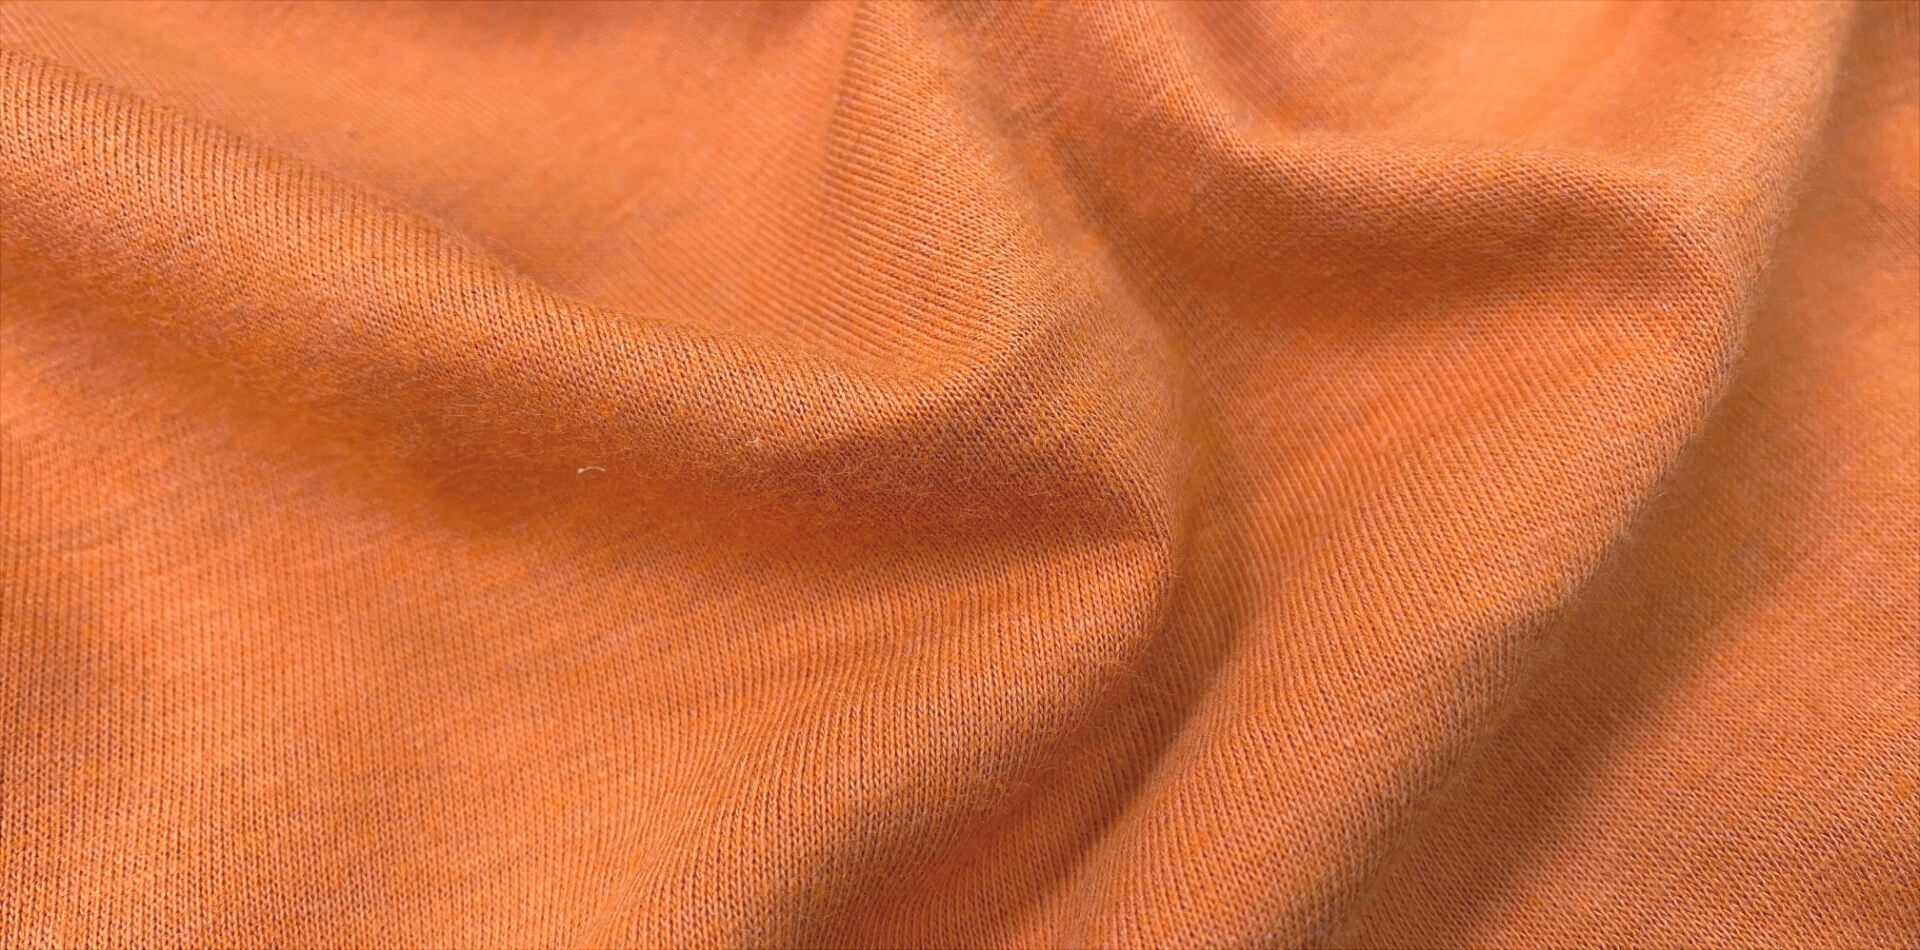 Fire Retardant Cotton Fabric